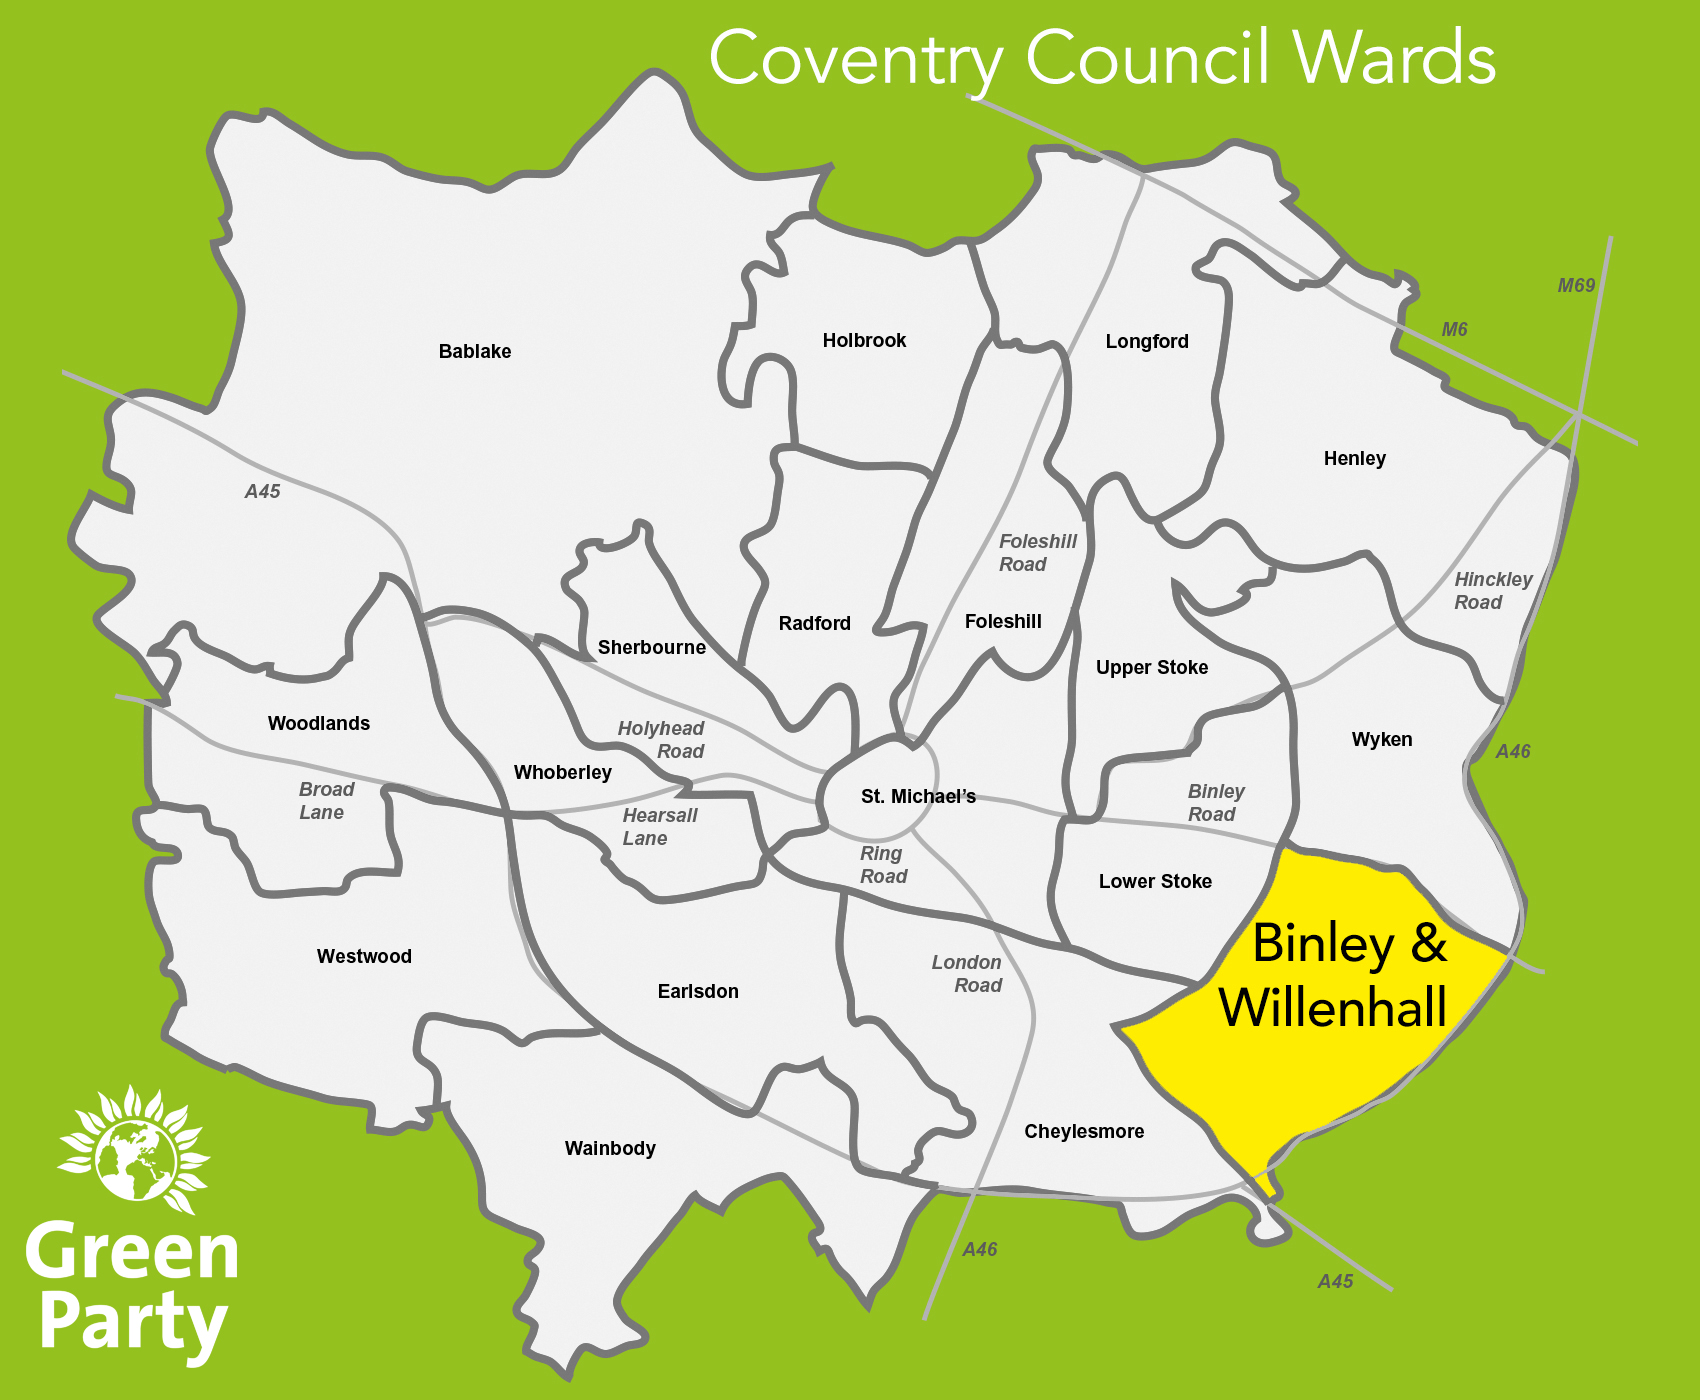 Binley & Willenhall ward map